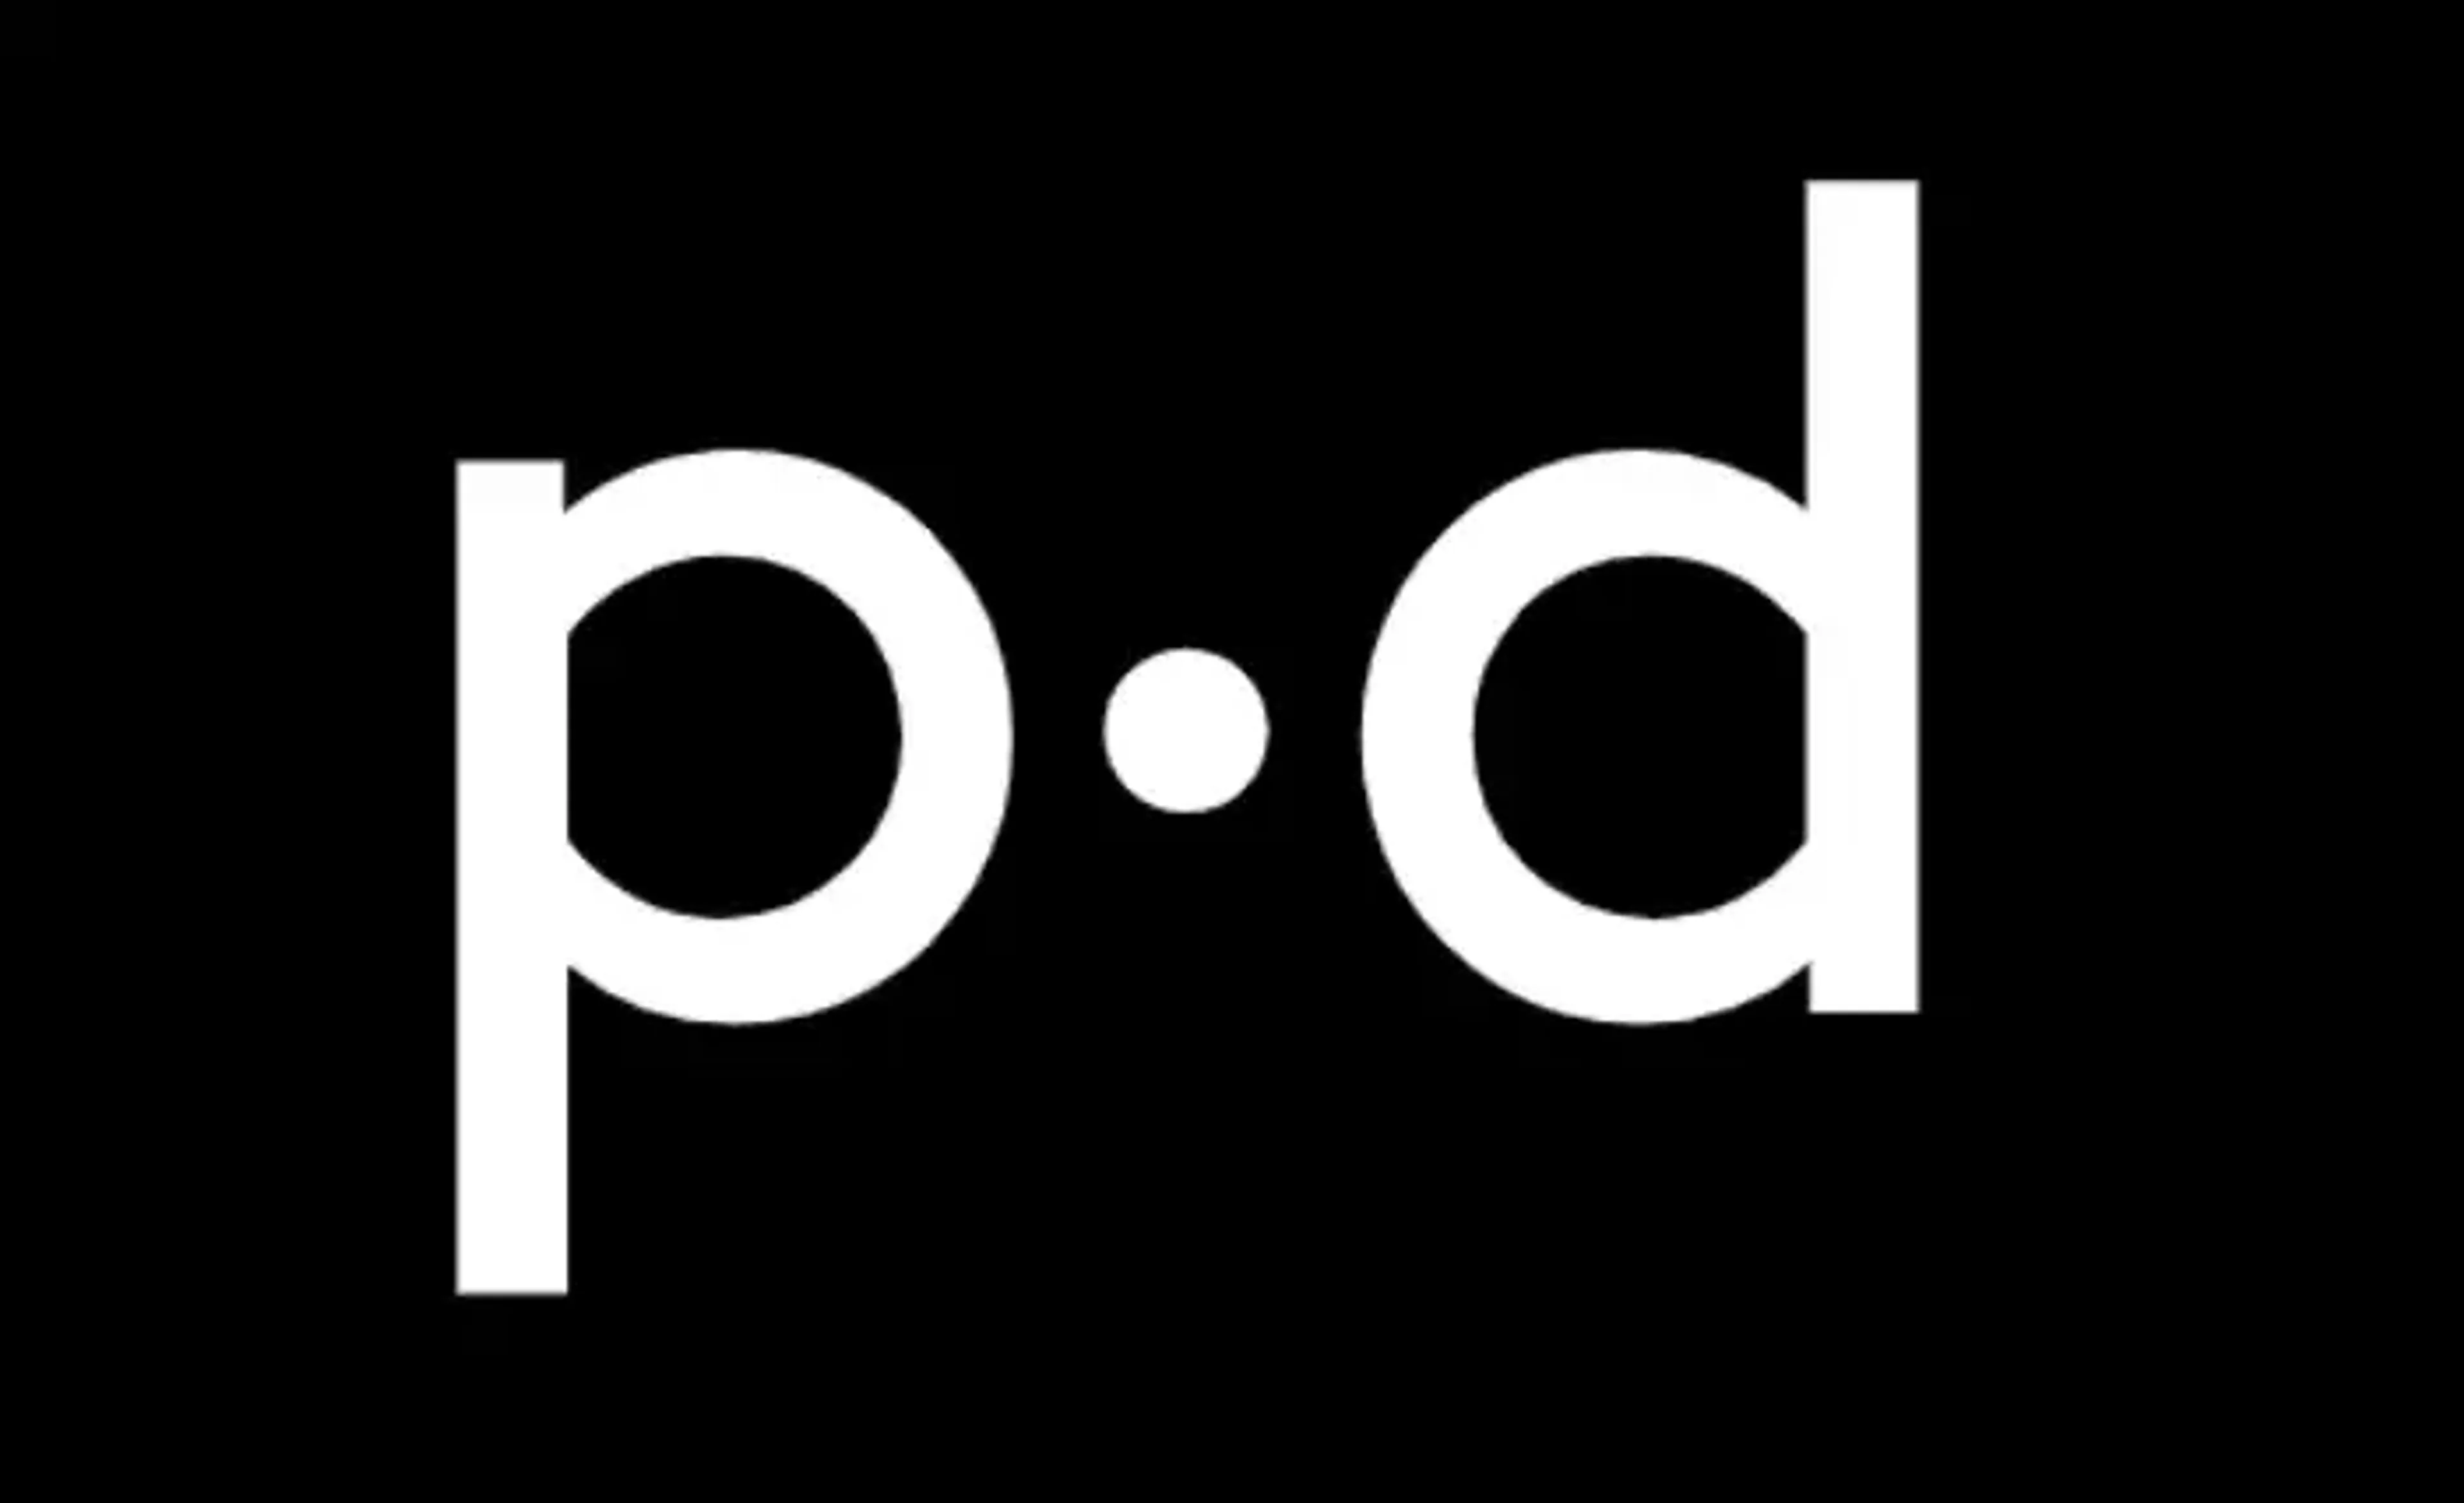 Public digital logo shown as PD